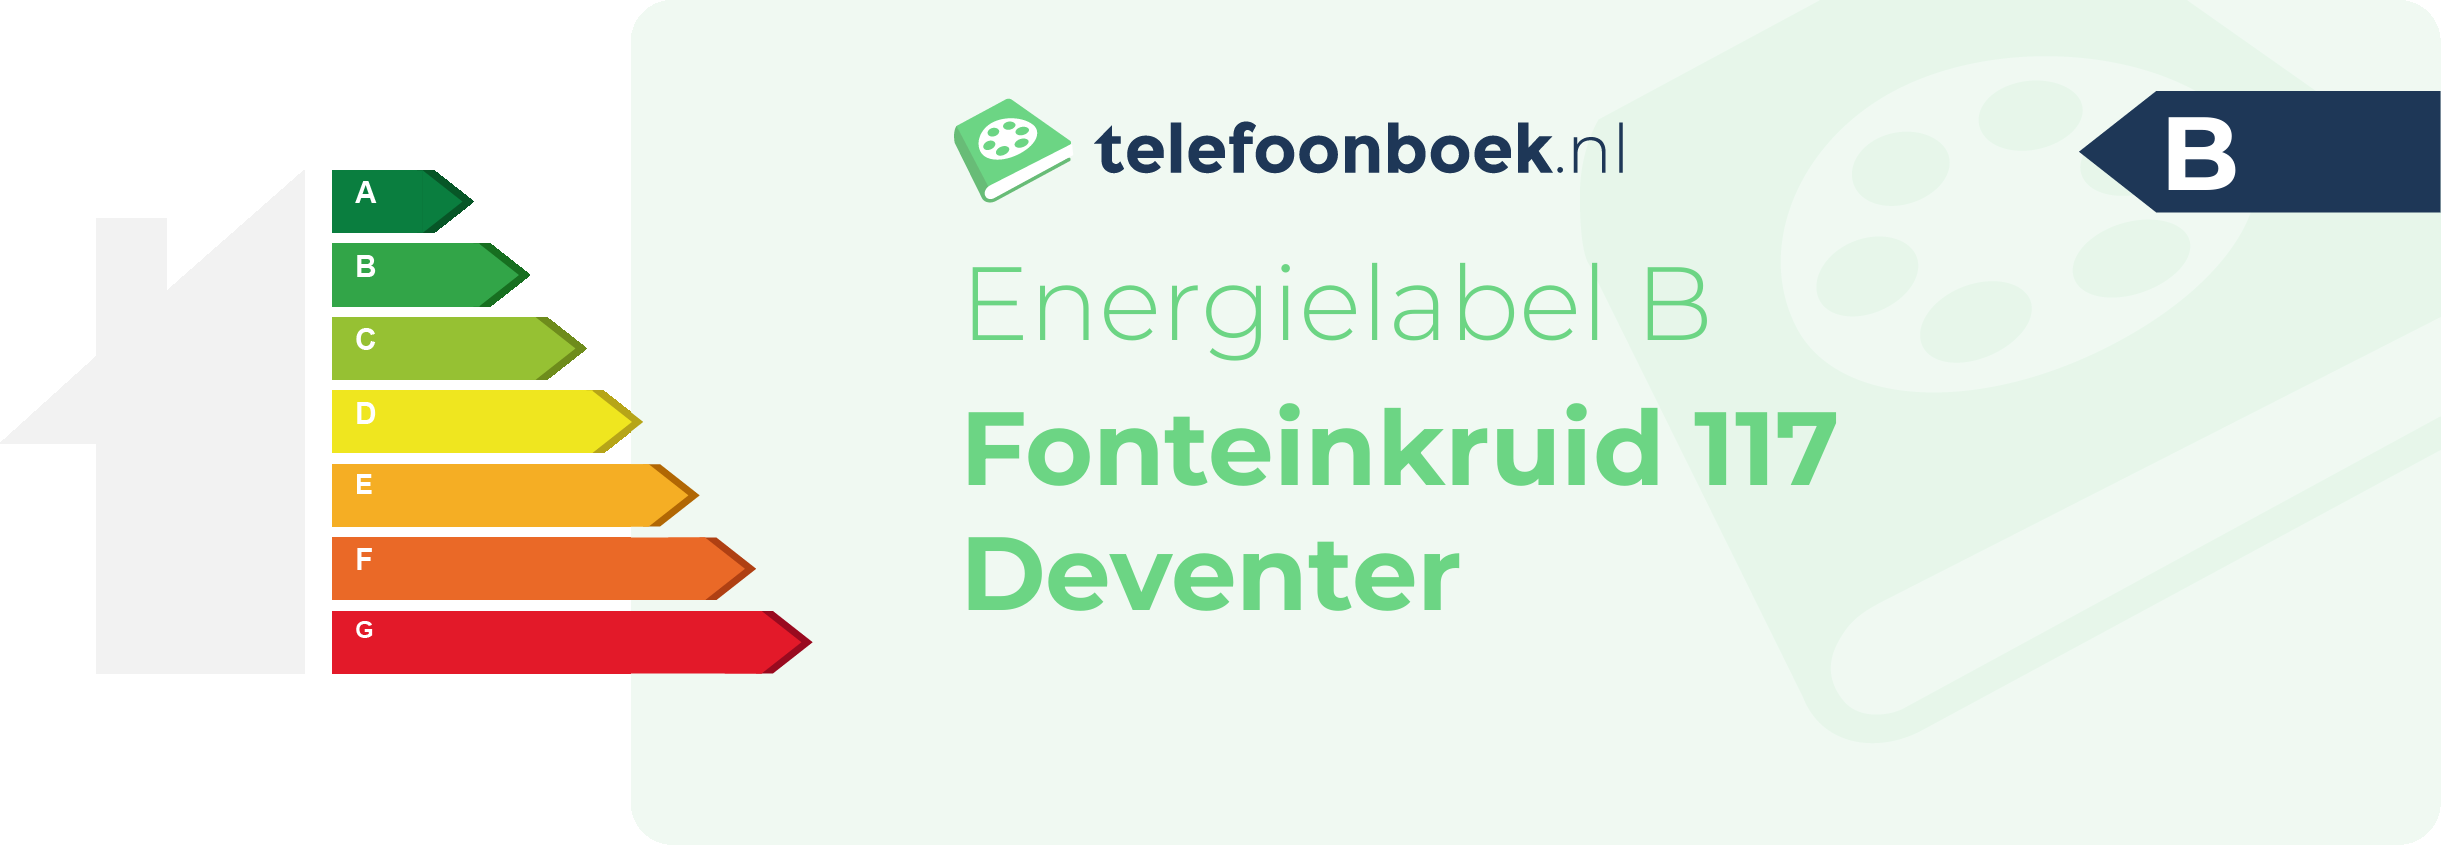 Energielabel Fonteinkruid 117 Deventer